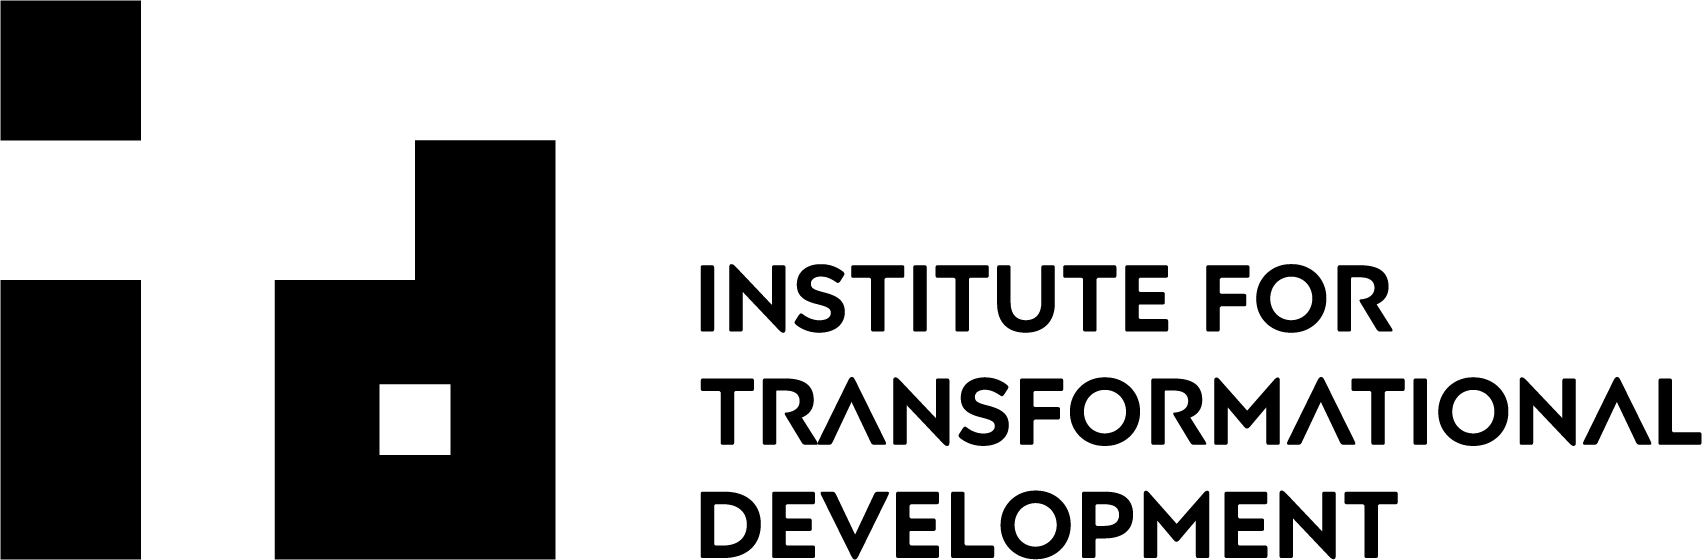 VR ITD logo